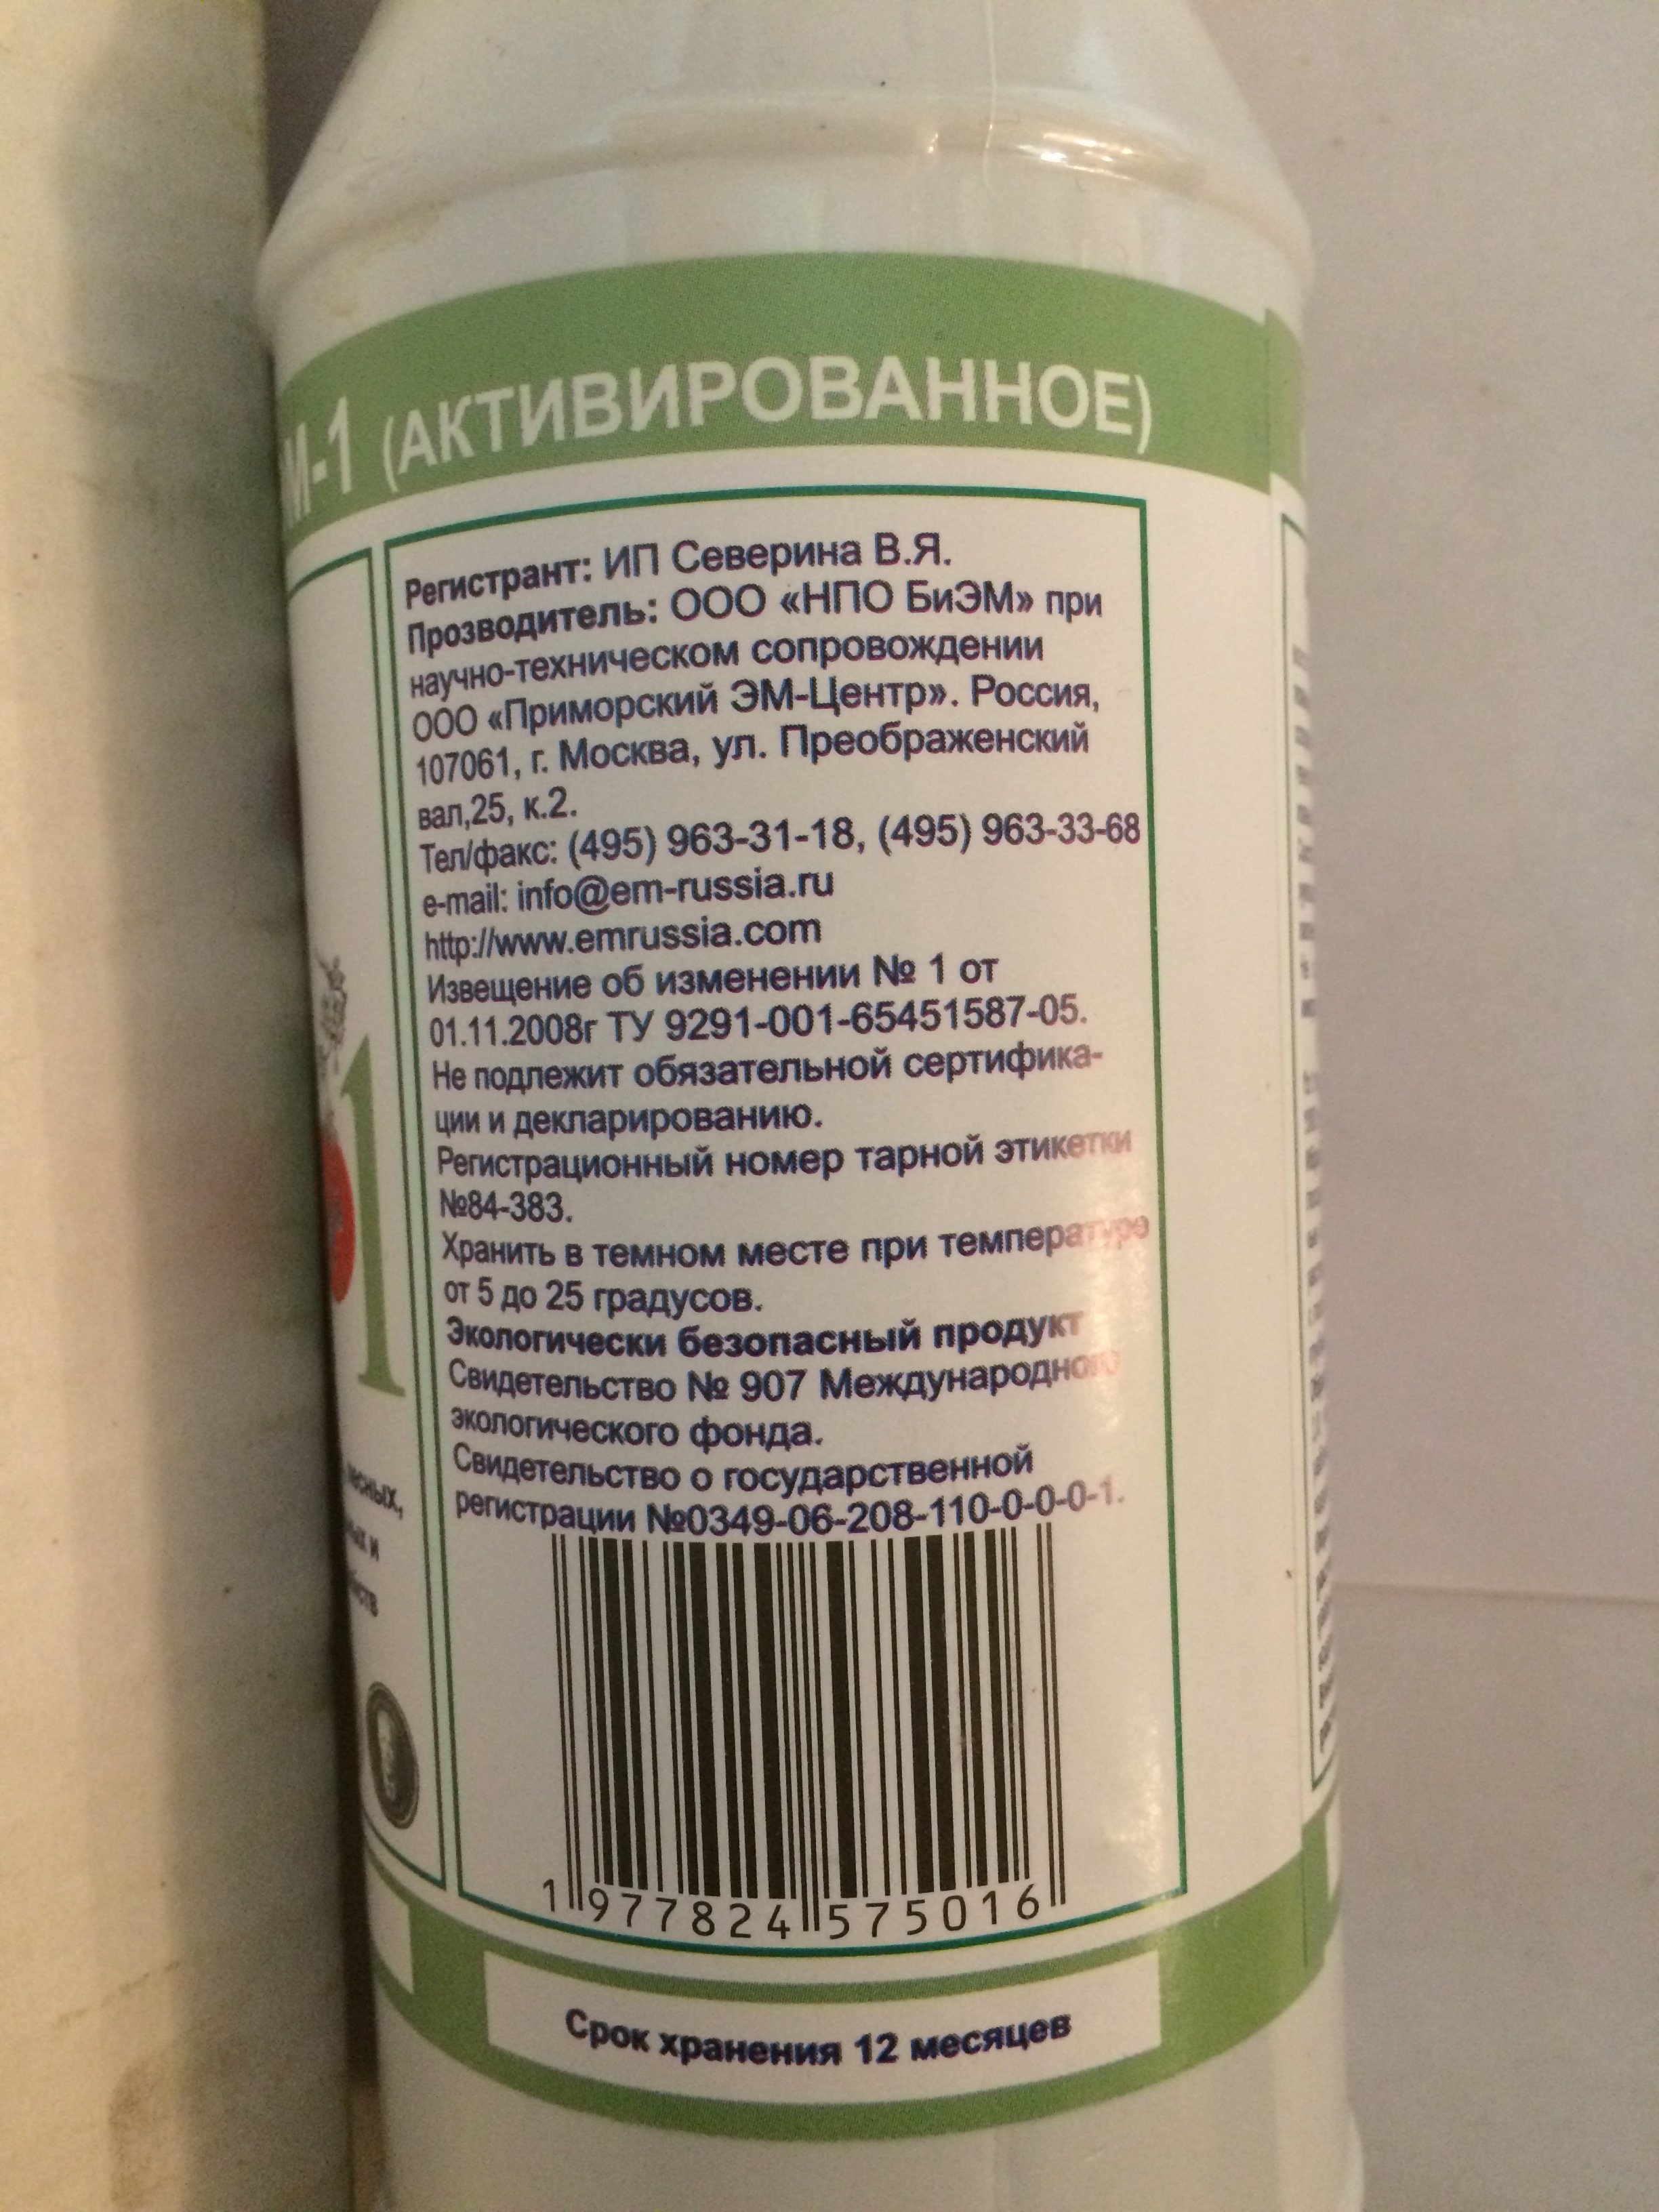 vostok-em-1-konc-10-ml (4)